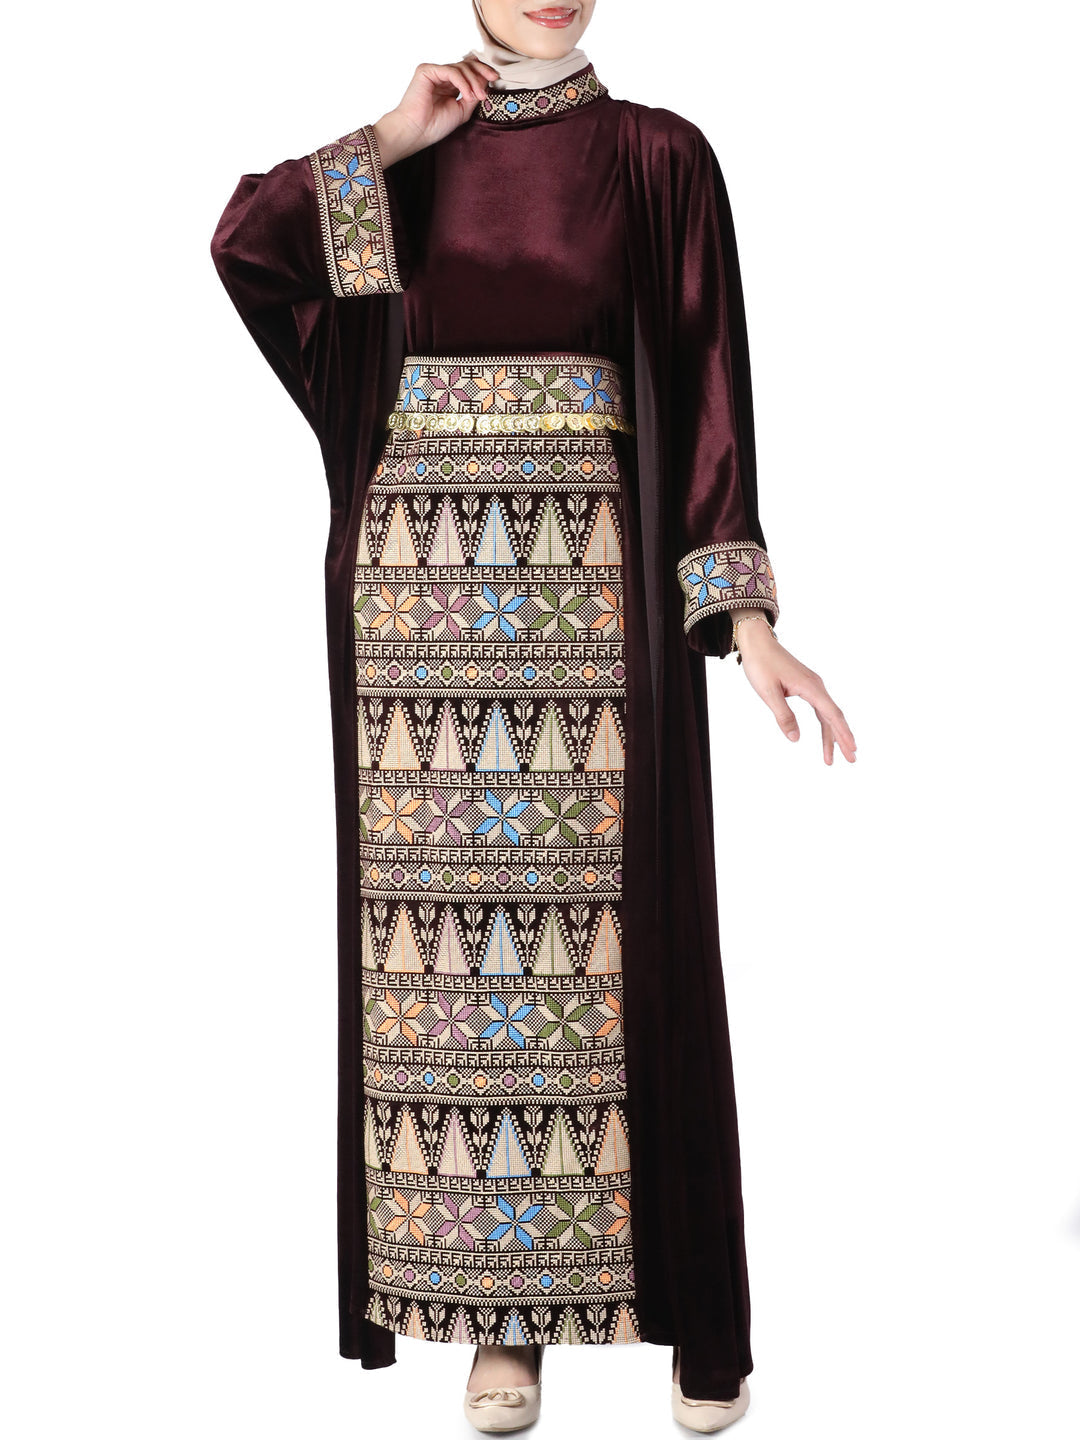 Jerusalem Velvet Bisht - 2 Piece High Quality Traditional Embroidered Palestinian Bisht